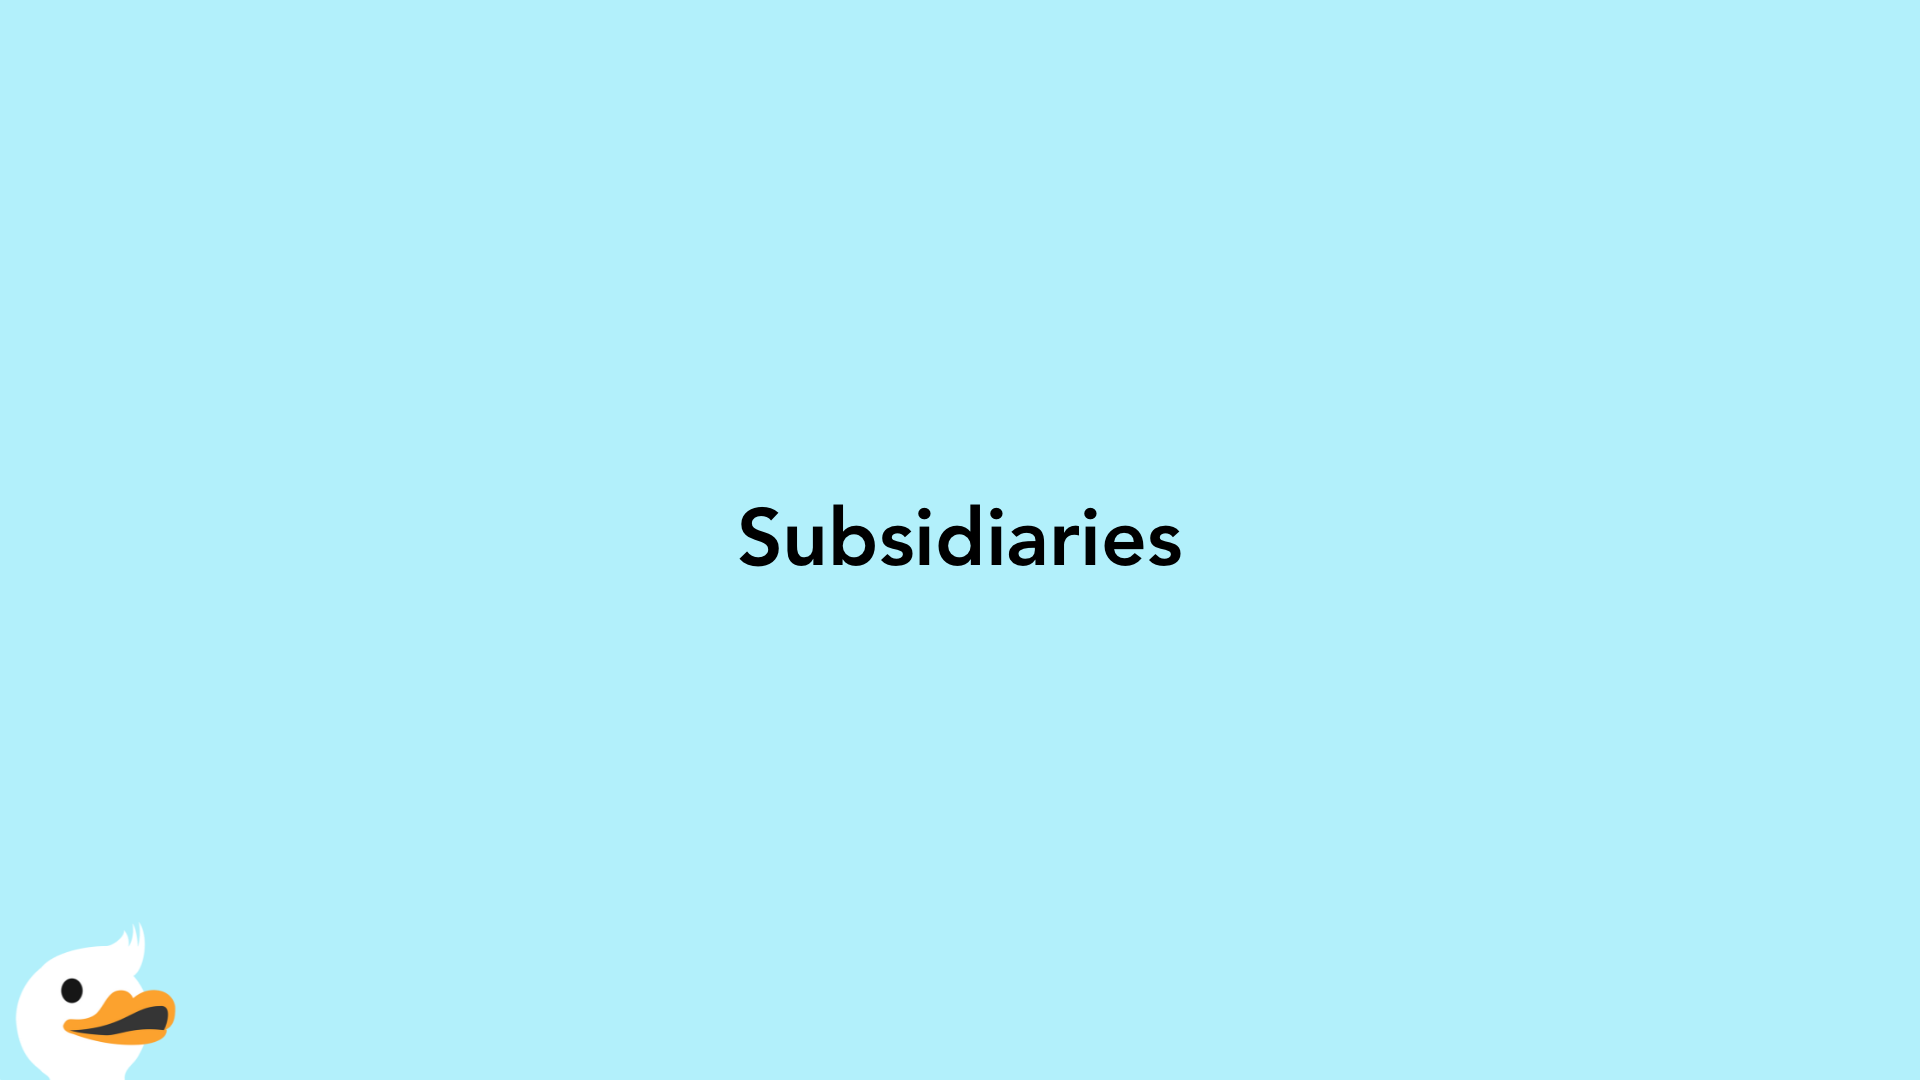 Subsidiaries